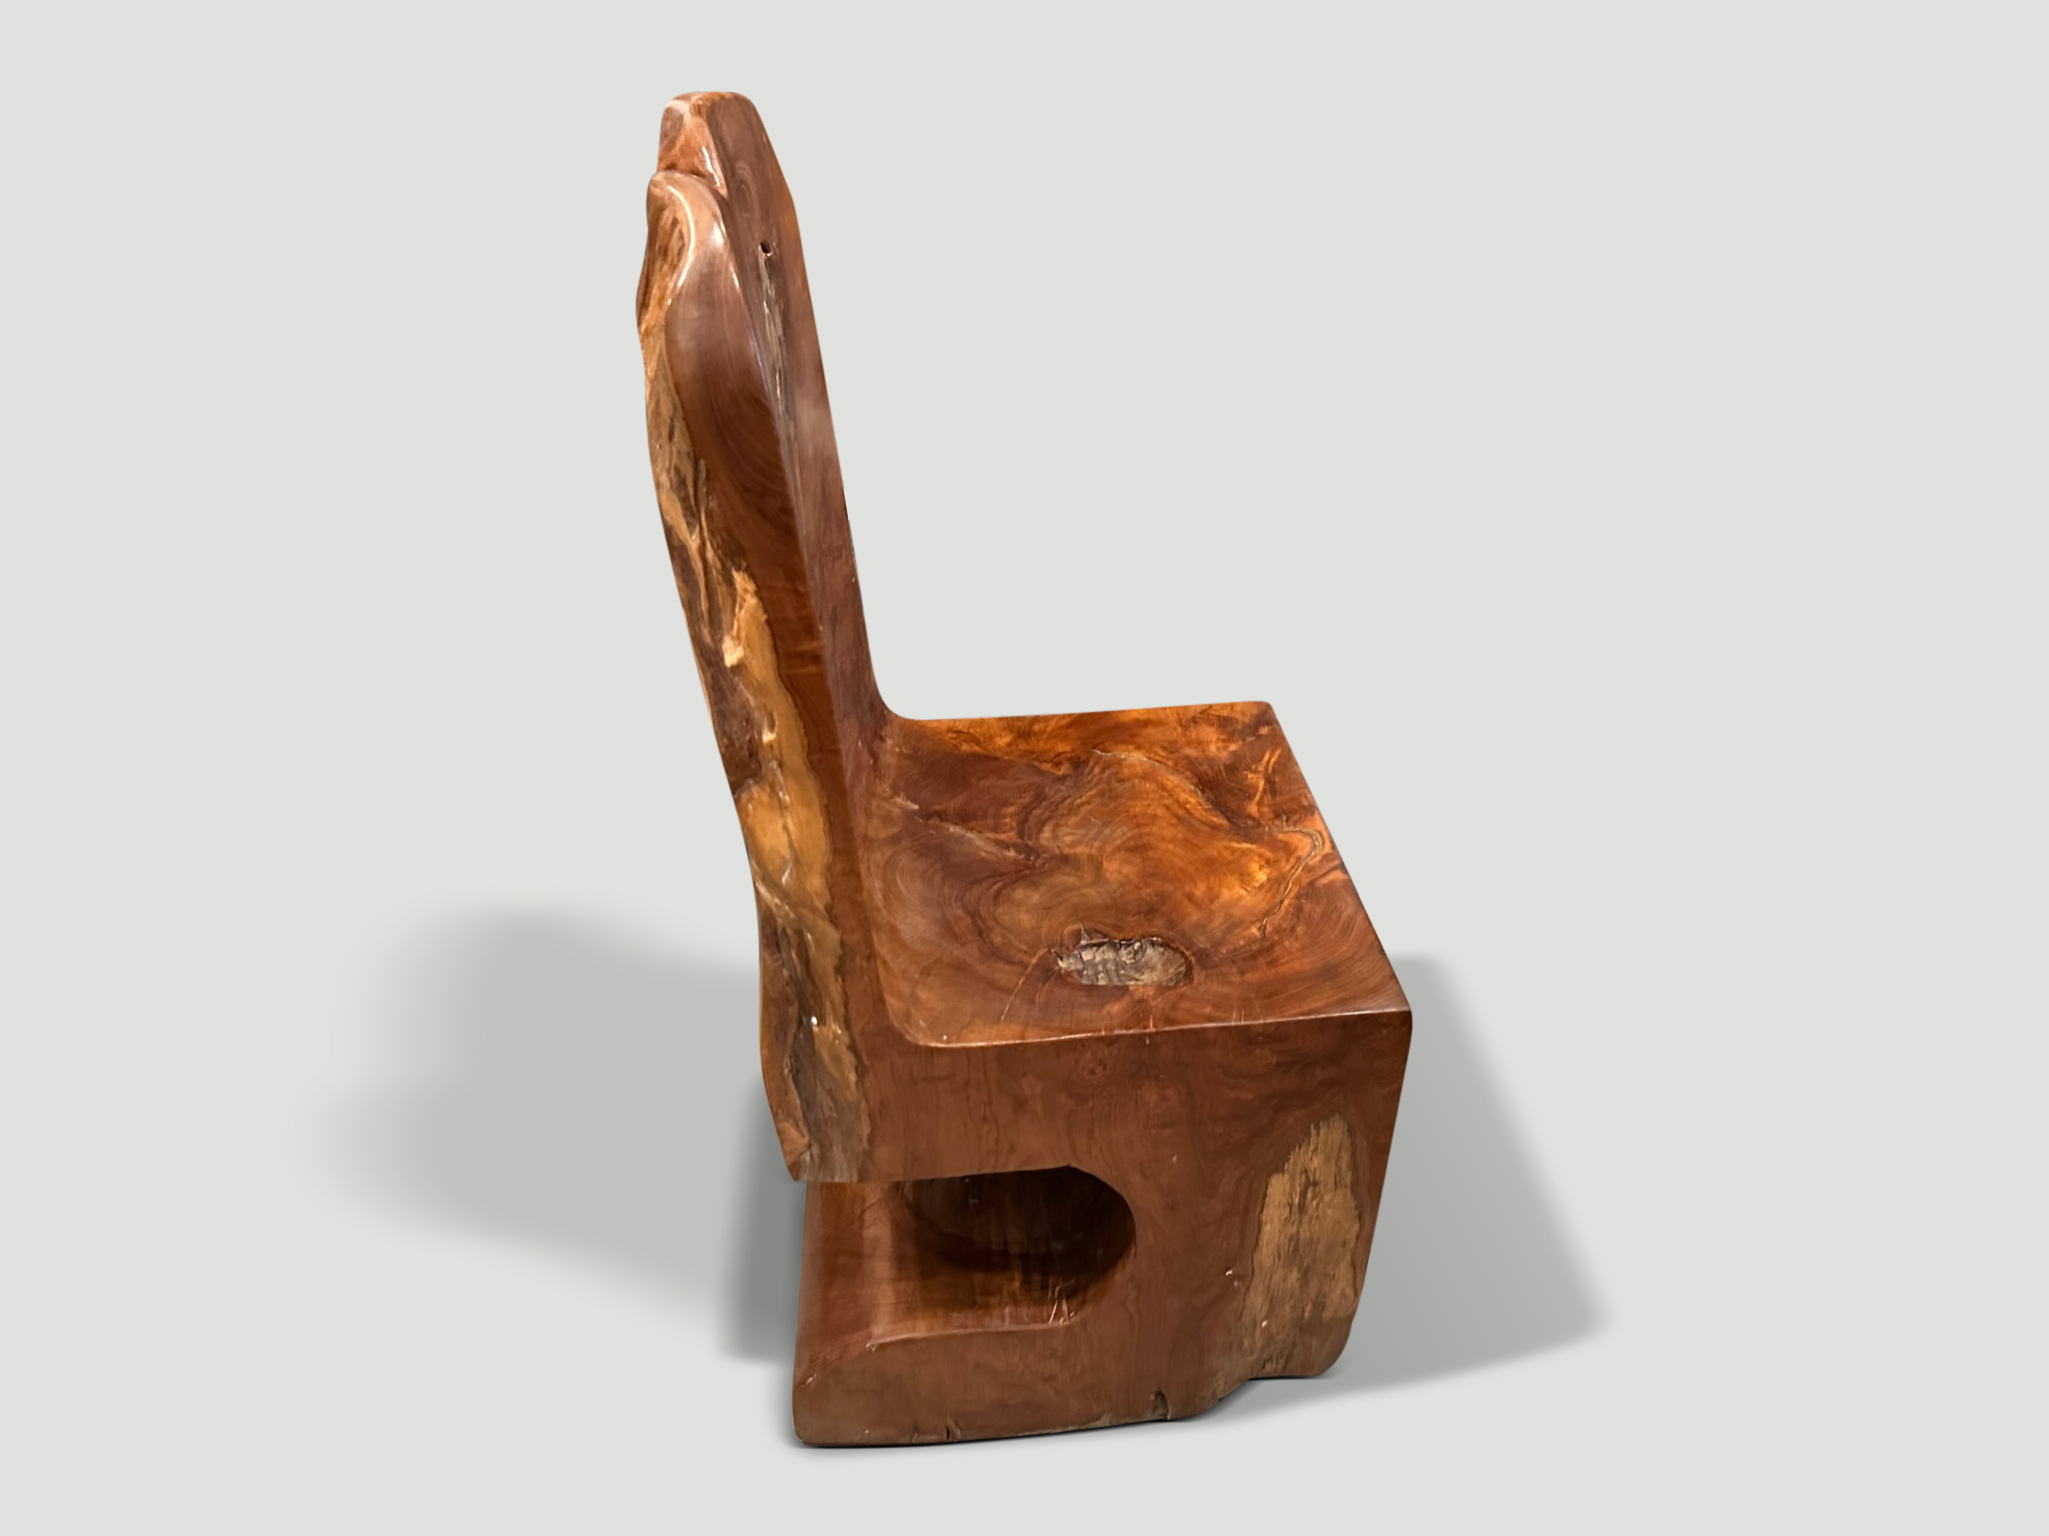 sculptural teak wood chair